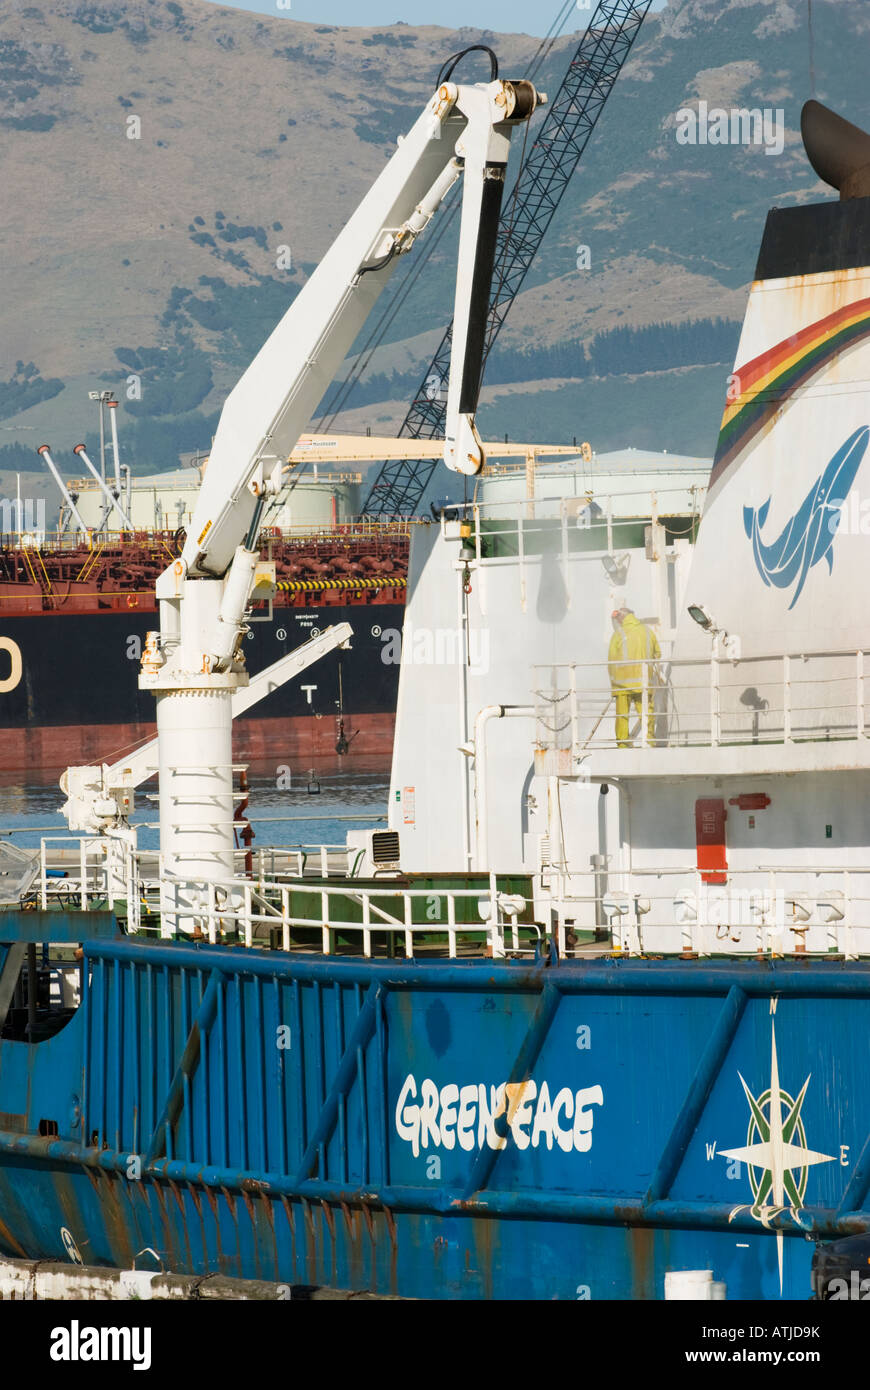 The Greenpeace ship Esperanza moored in the Port of Lyttelton for maintenance Stock Photo